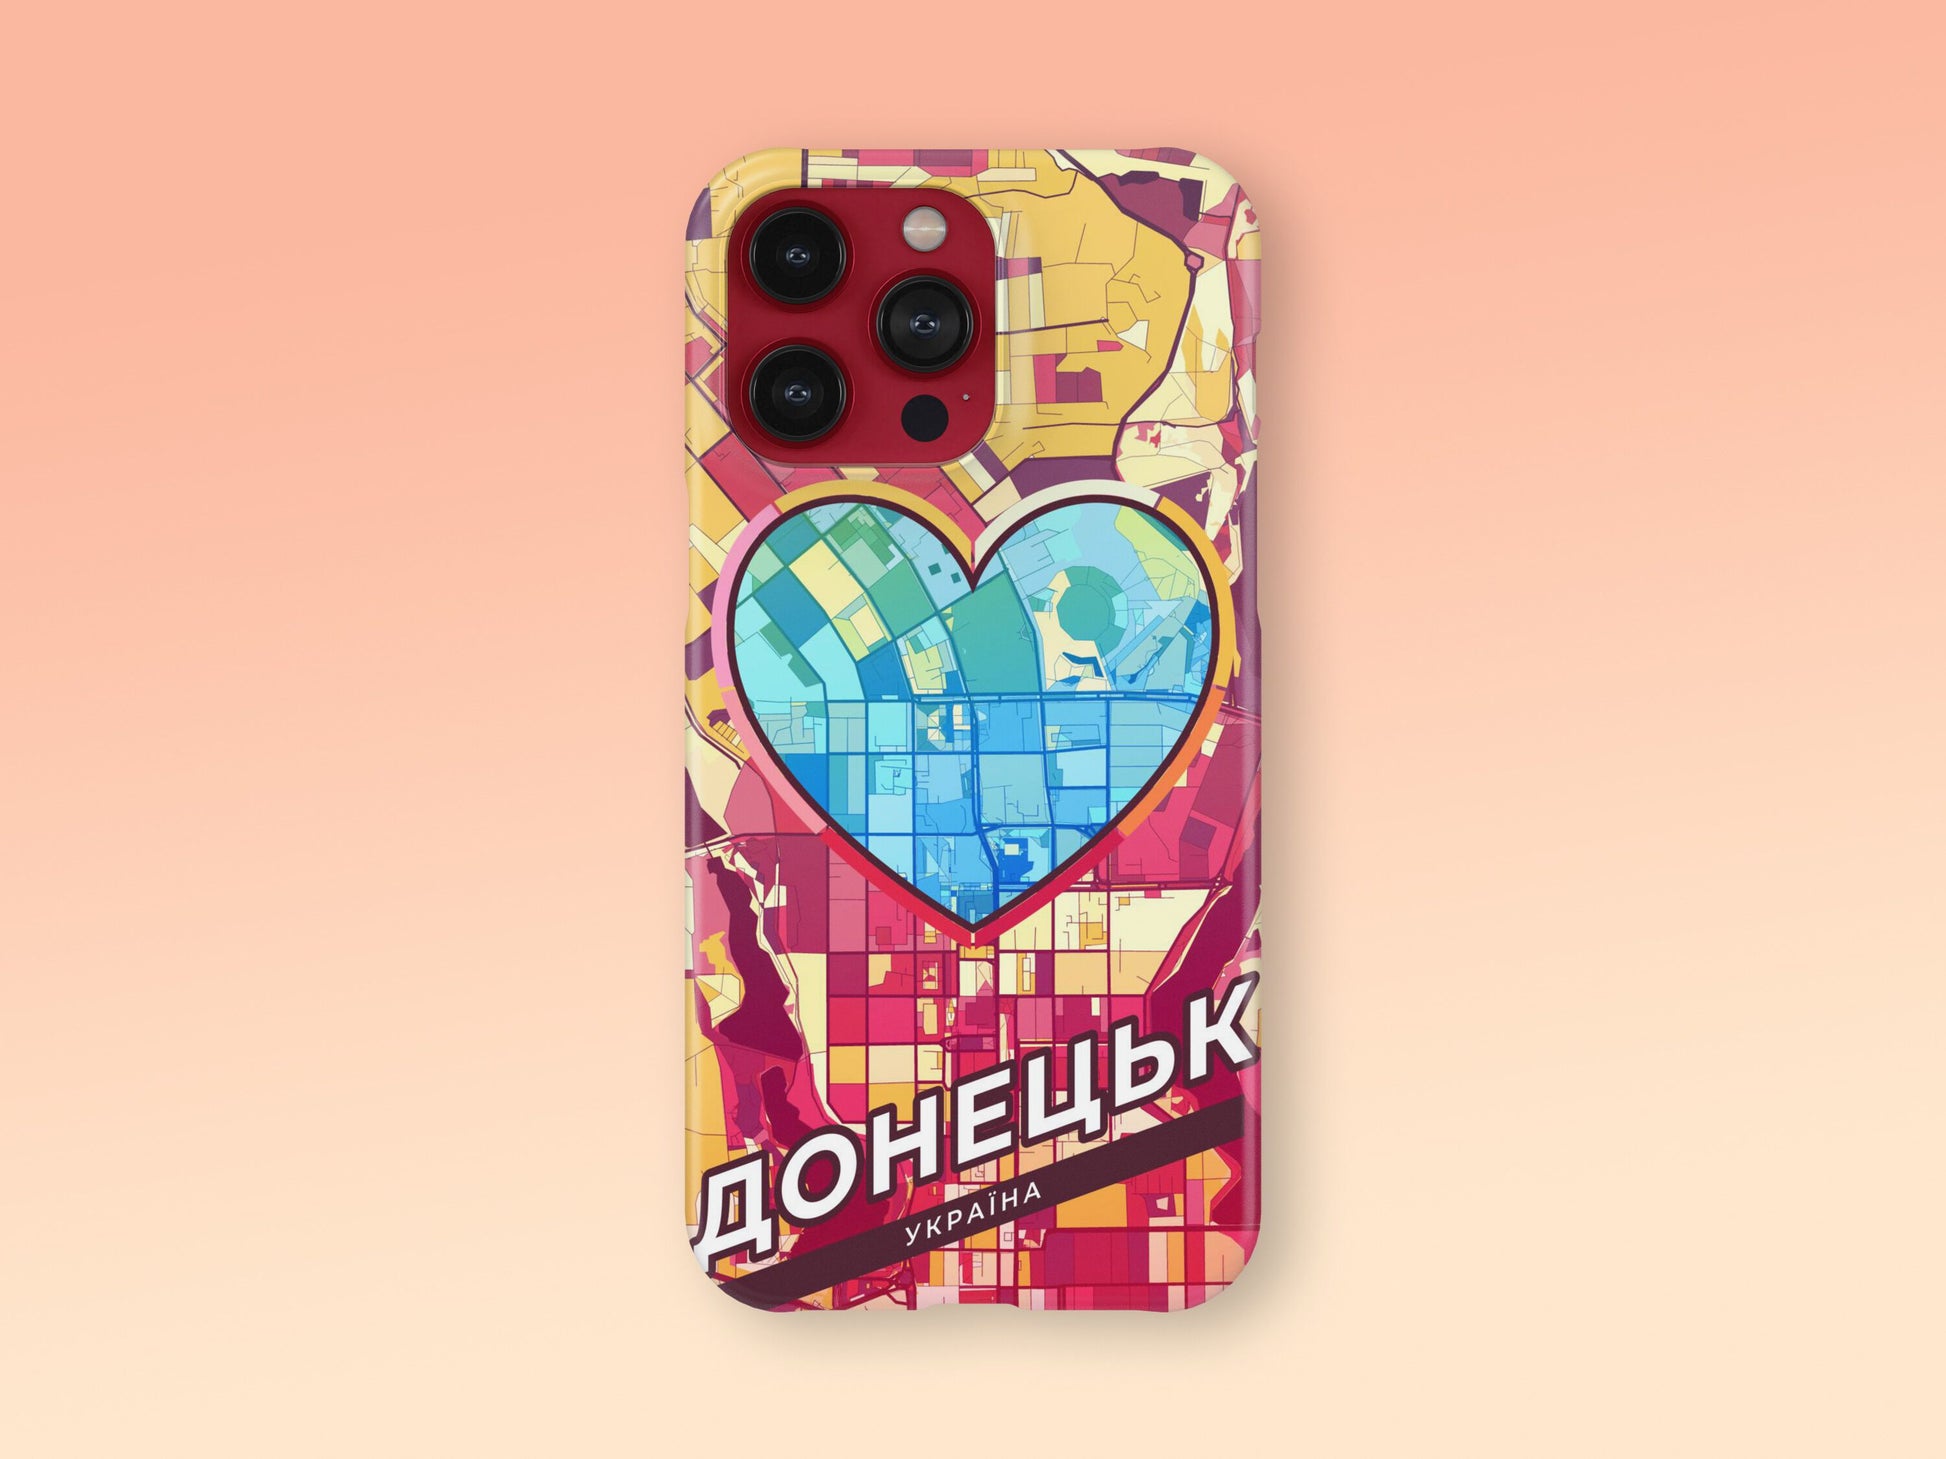 Donetsk Ukraine slim phone case with colorful icon. Birthday, wedding or housewarming gift. Couple match cases. 2